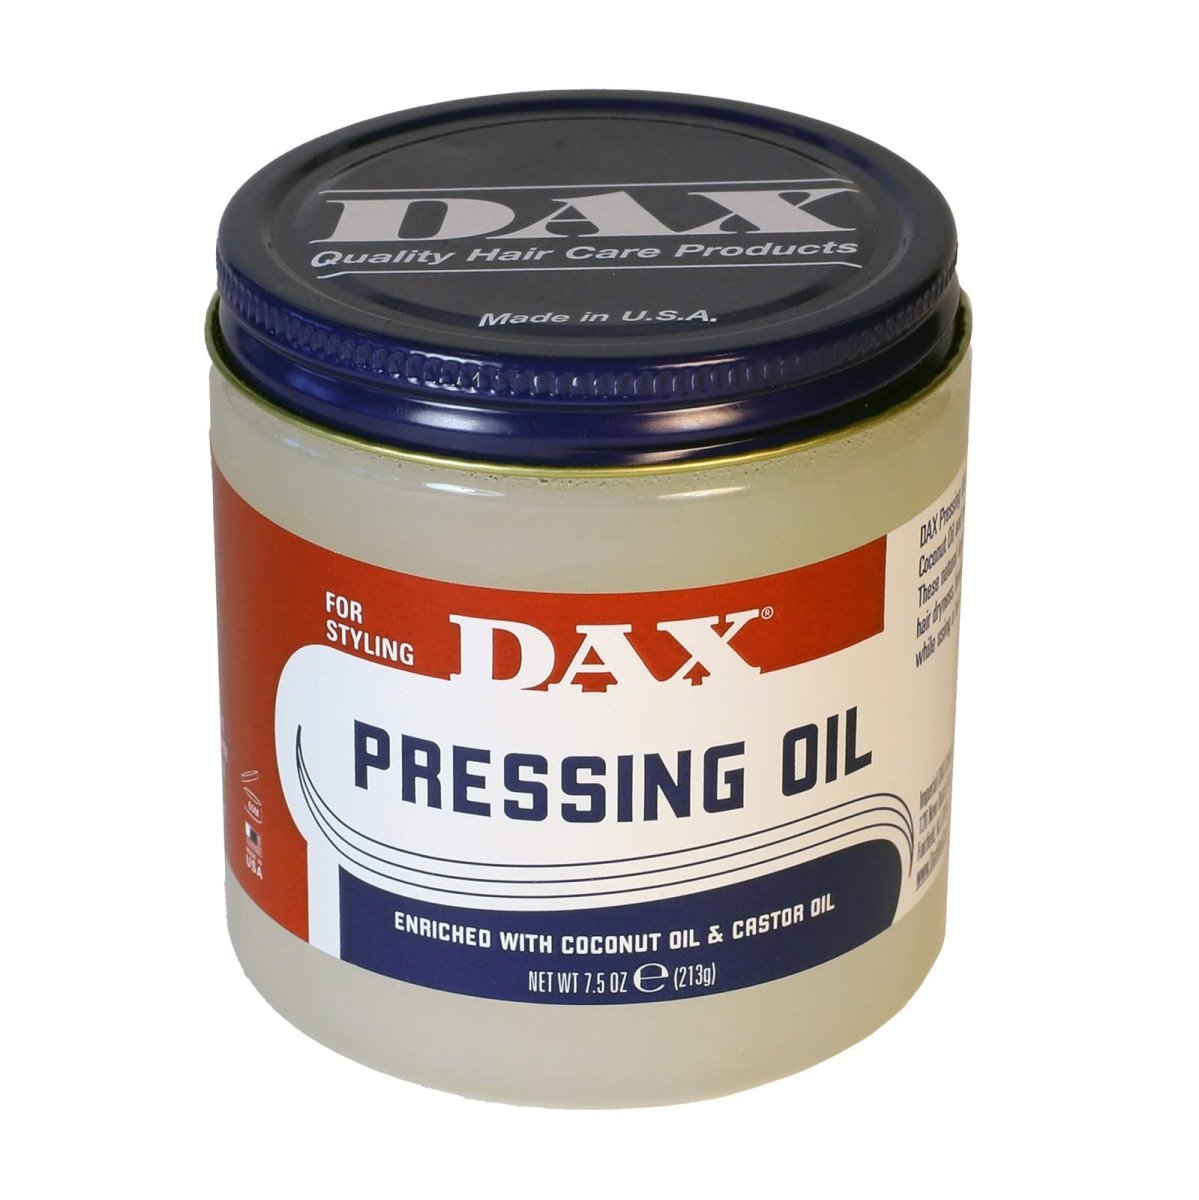 DAX Pressing Oil - Southwestsix Cosmetics DAX Pressing Oil Heat Protector DAX Southwestsix Cosmetics 7.5oz DAX Pressing Oil